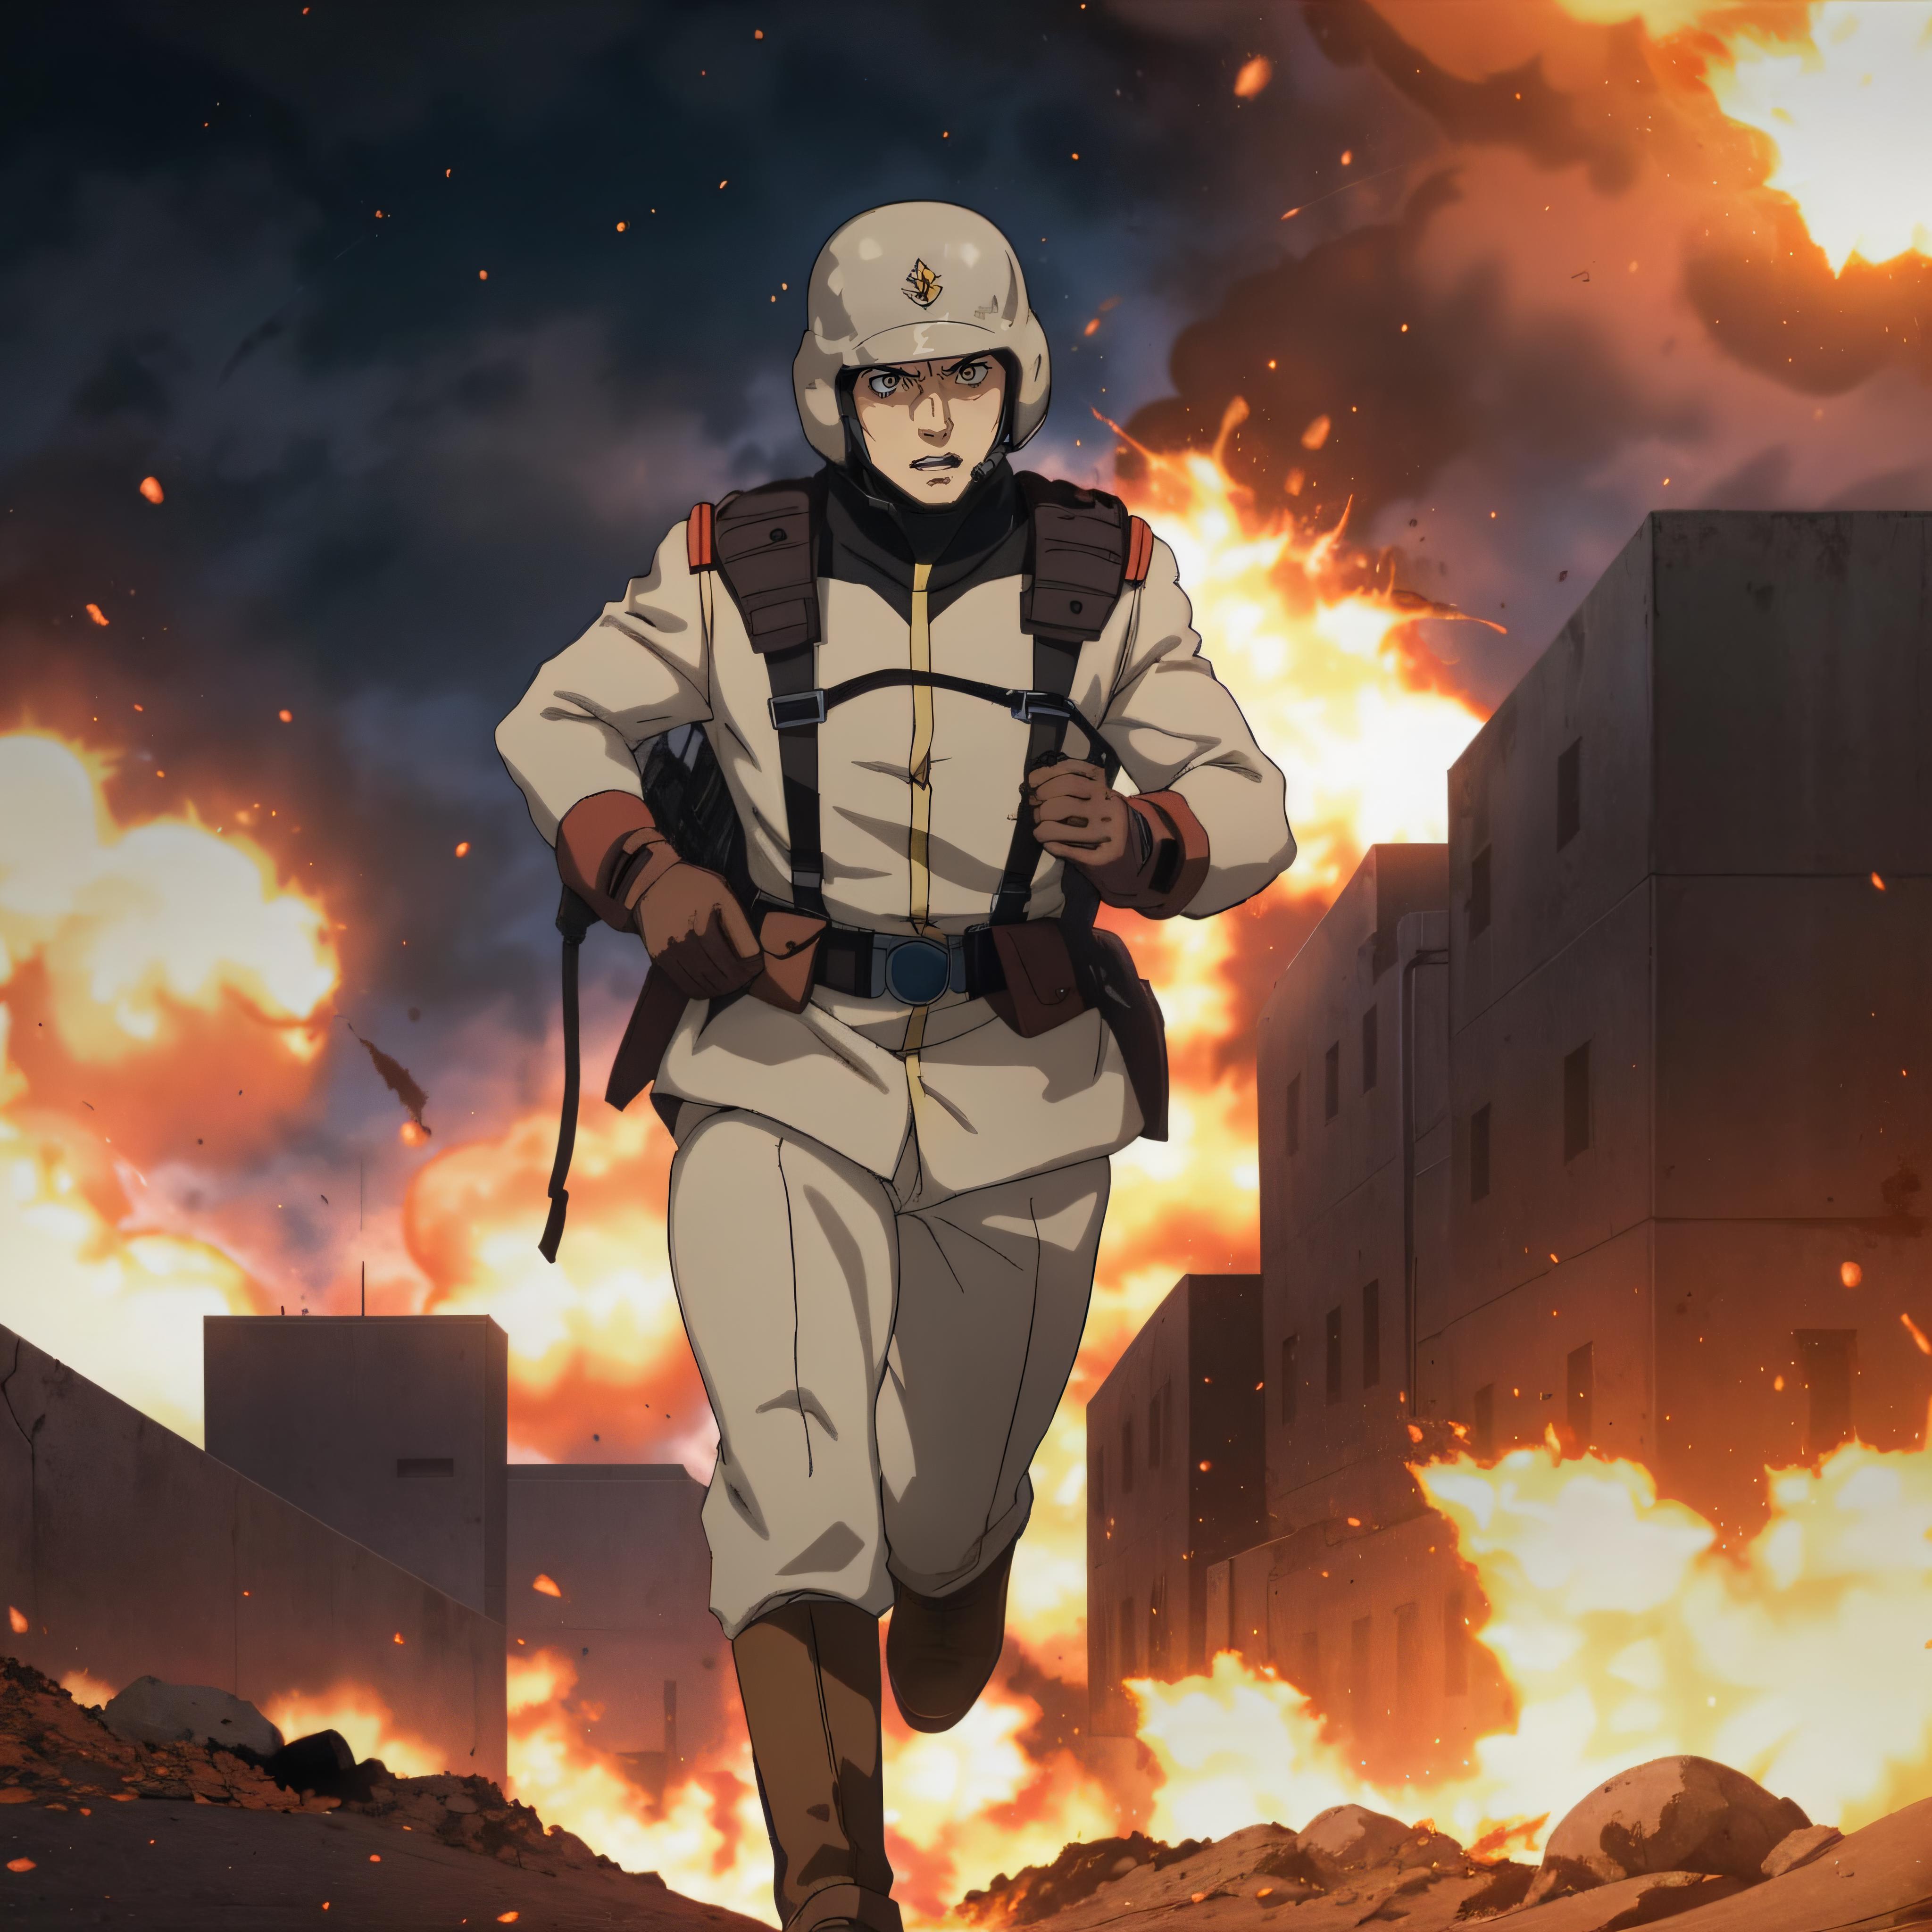 EFF Soldier (Mobile Suit Gundam) image by RubiWanJinn